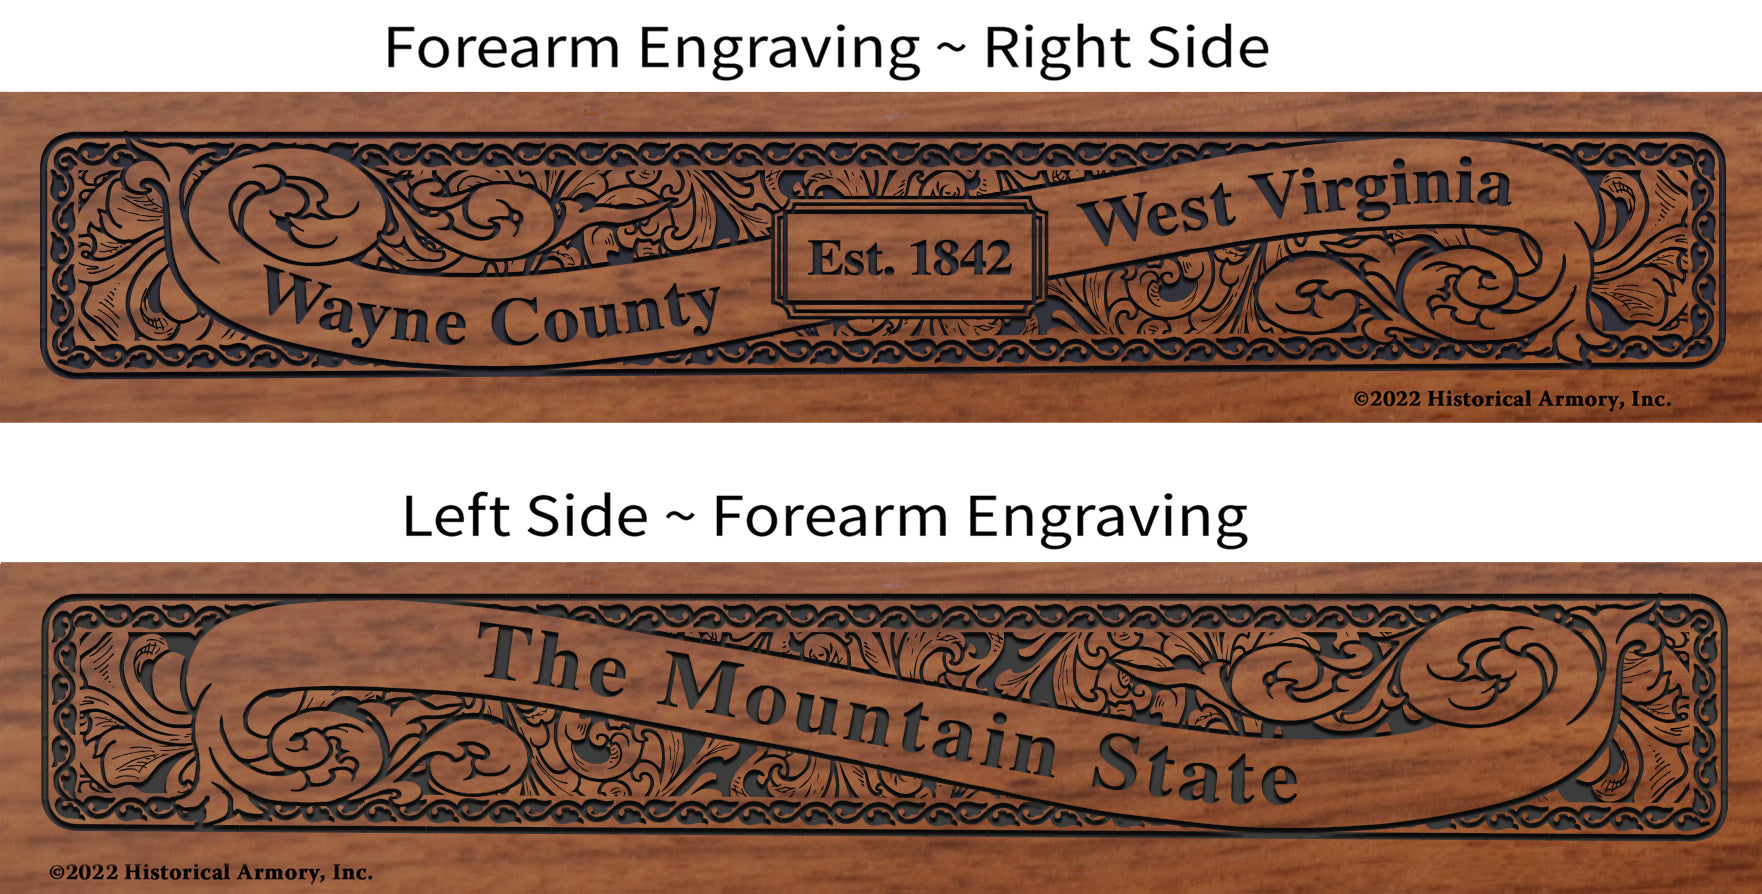 Wayne County West Virginia Engraved Rifle Forearm